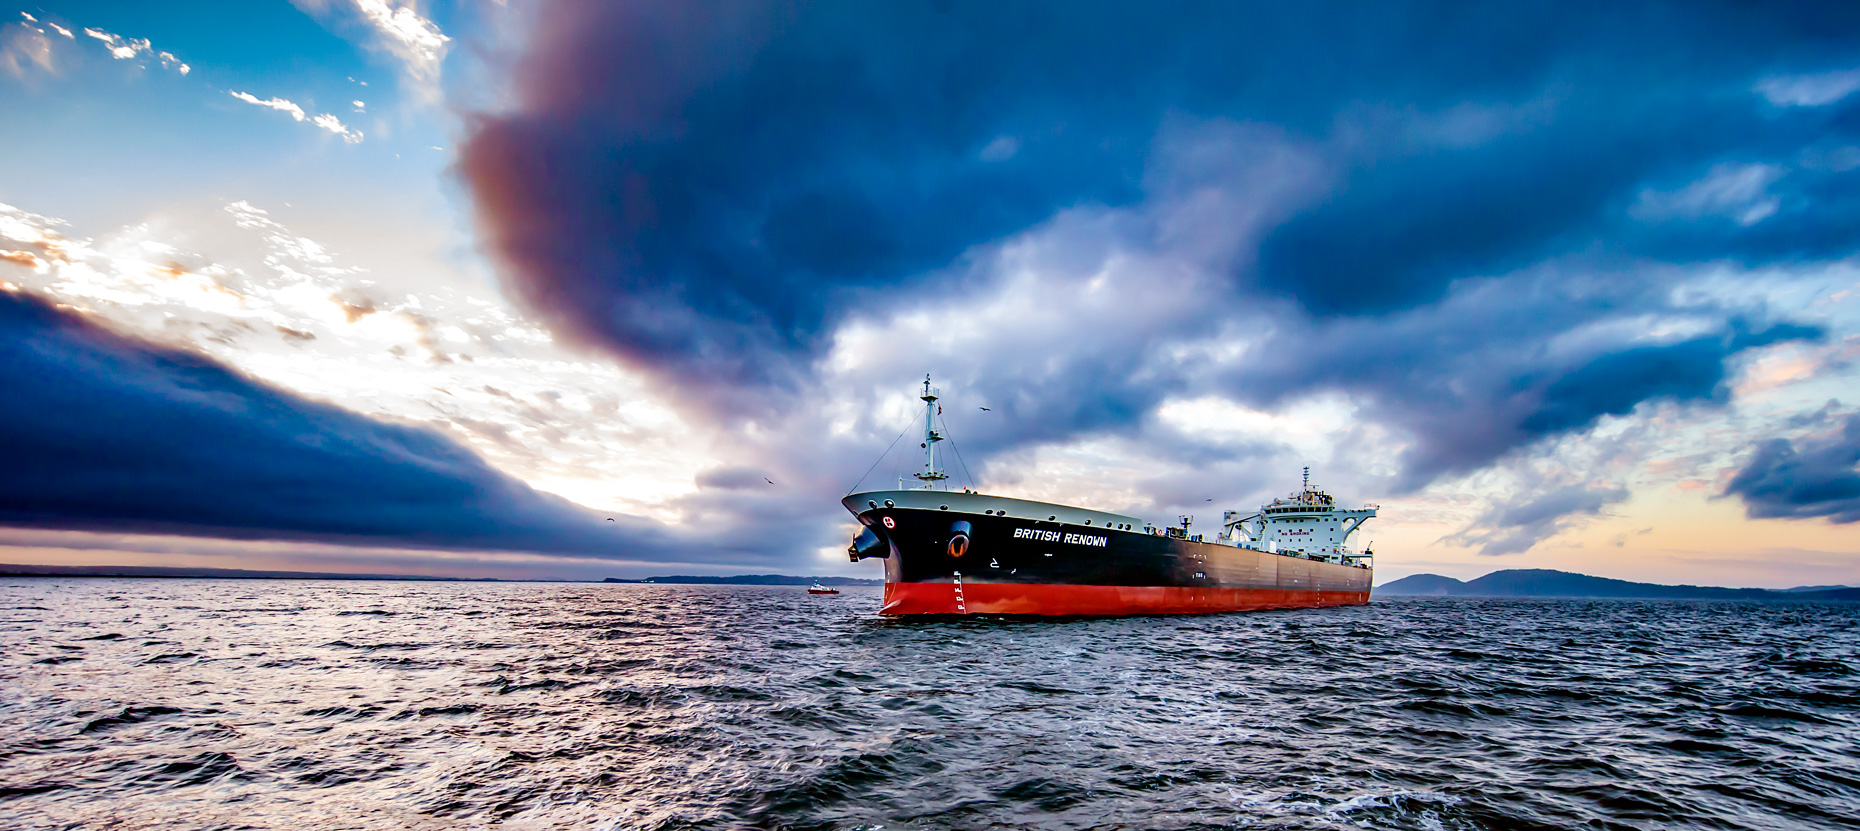 British Renown anchored off Vendovi Island, WA waiting to offload crude oil.